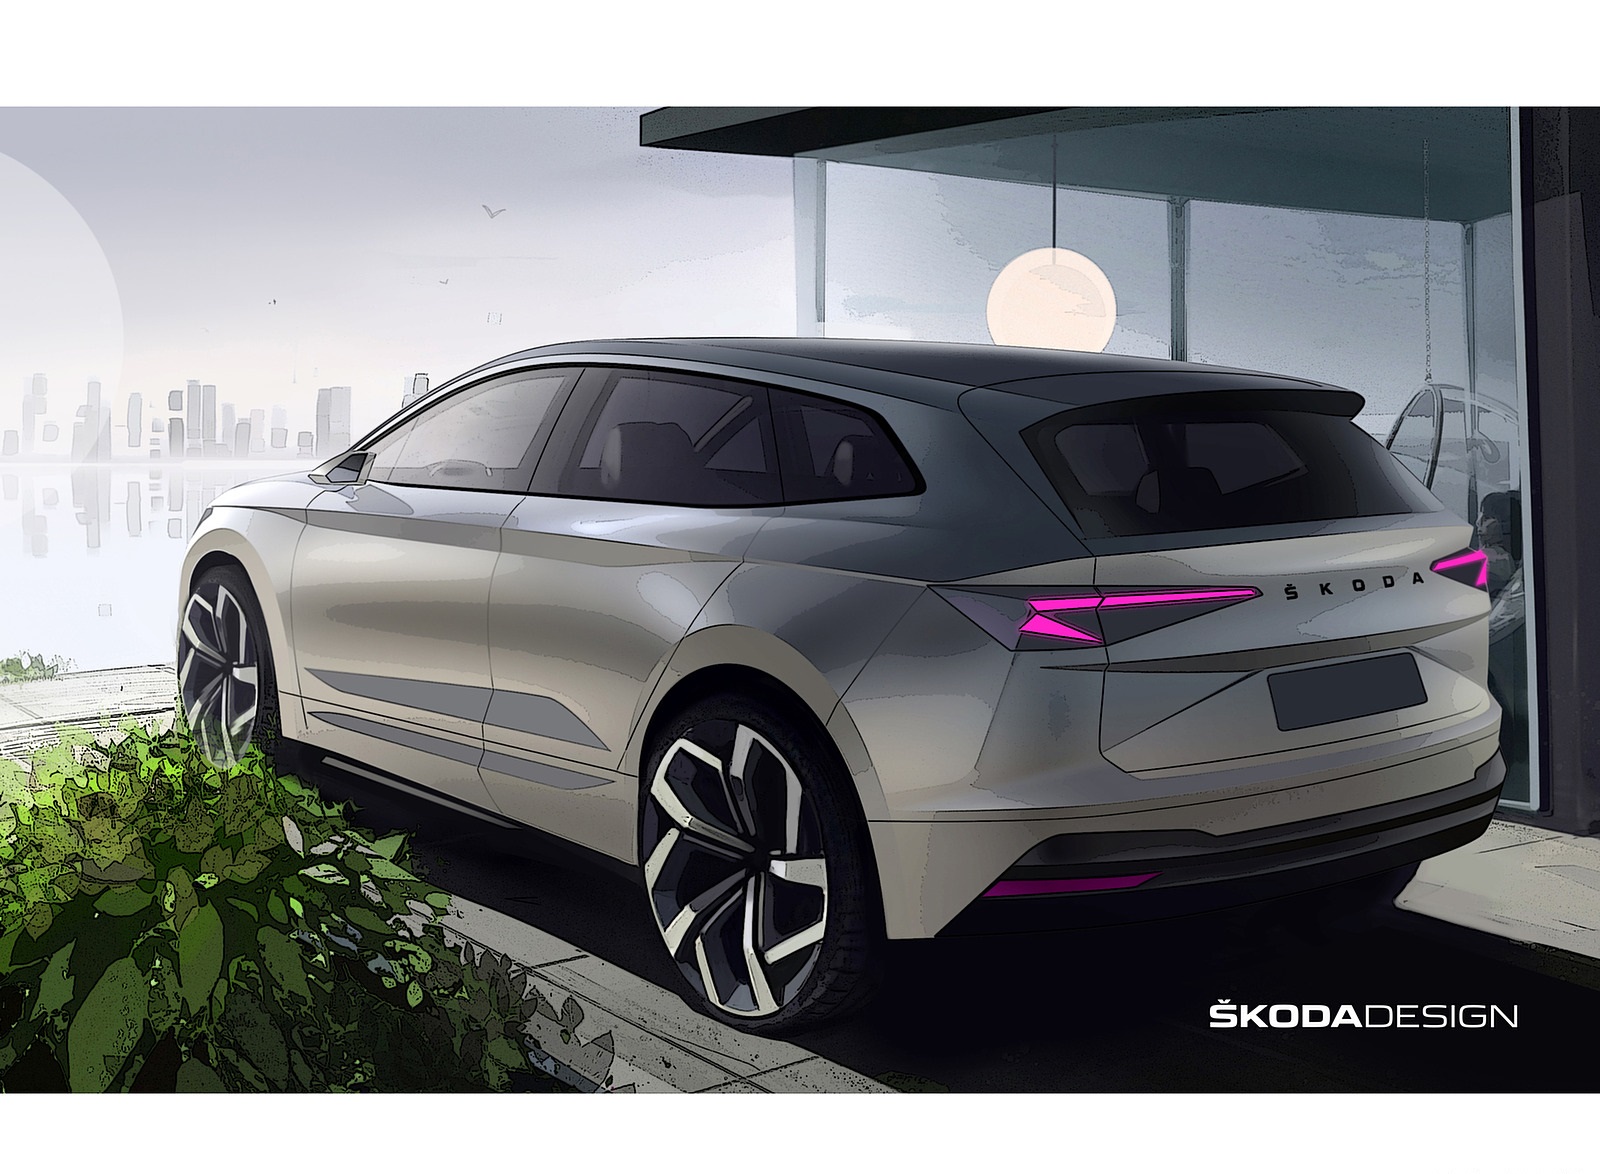 2021 Škoda ENYAQ iV Design Sketch Wallpapers #156 of 184